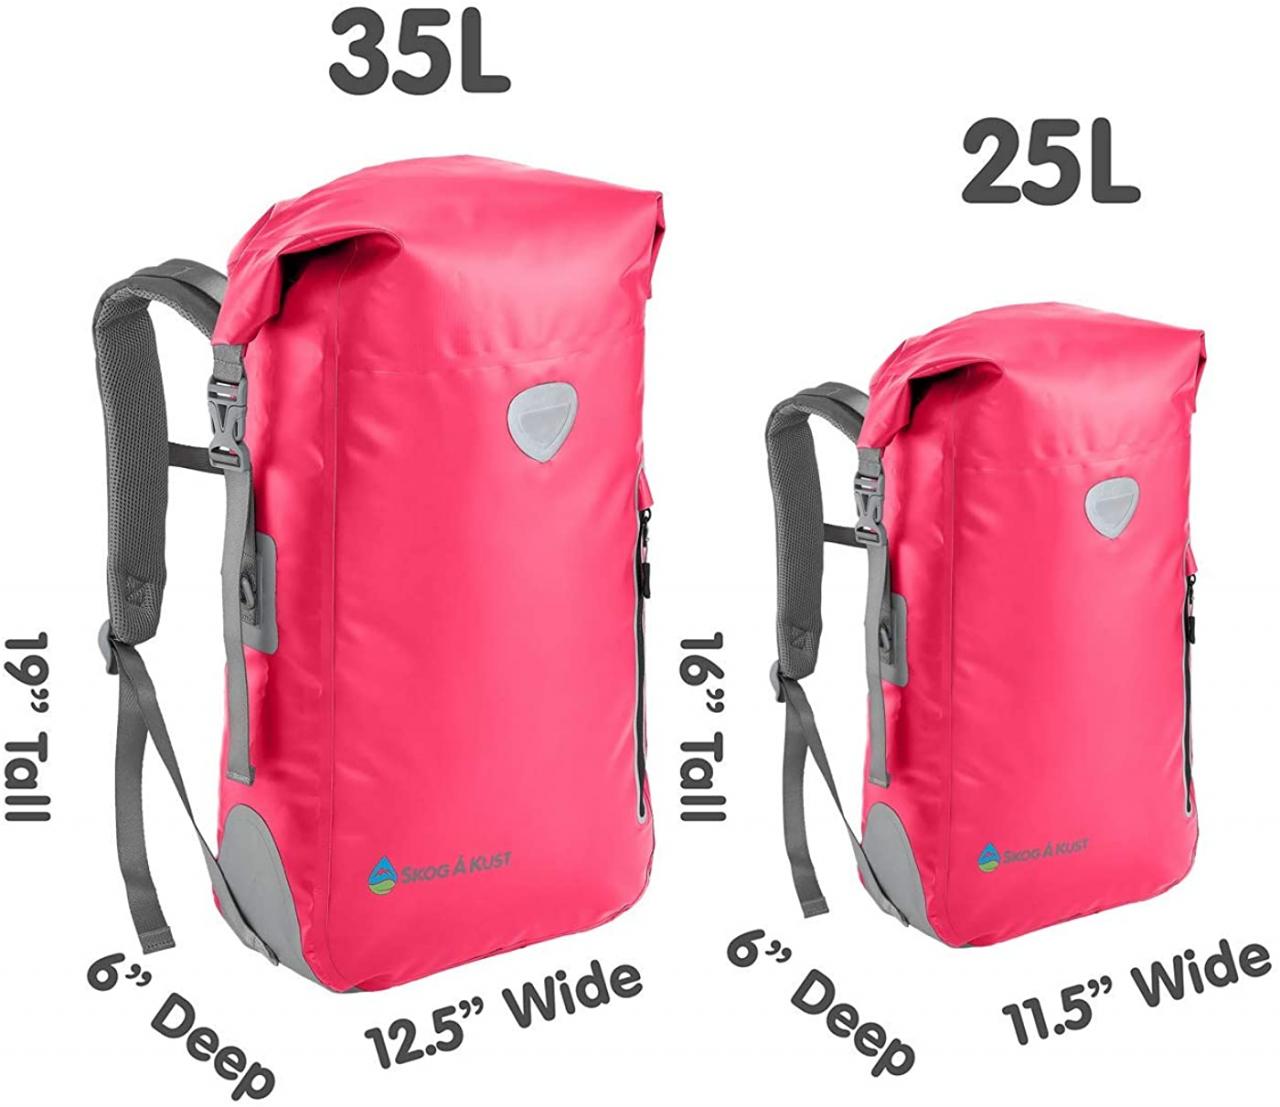 Buy Skog Å Kust BackSåk Waterproof Floating Backpack with Exterior Zippered  Pocket | for Kayaking, Rafting, Boating, Swimming, Camping, Hiking, Beach,  Fishing | 25L & 35L Sizes Online in Vietnam. B01GK97UX4